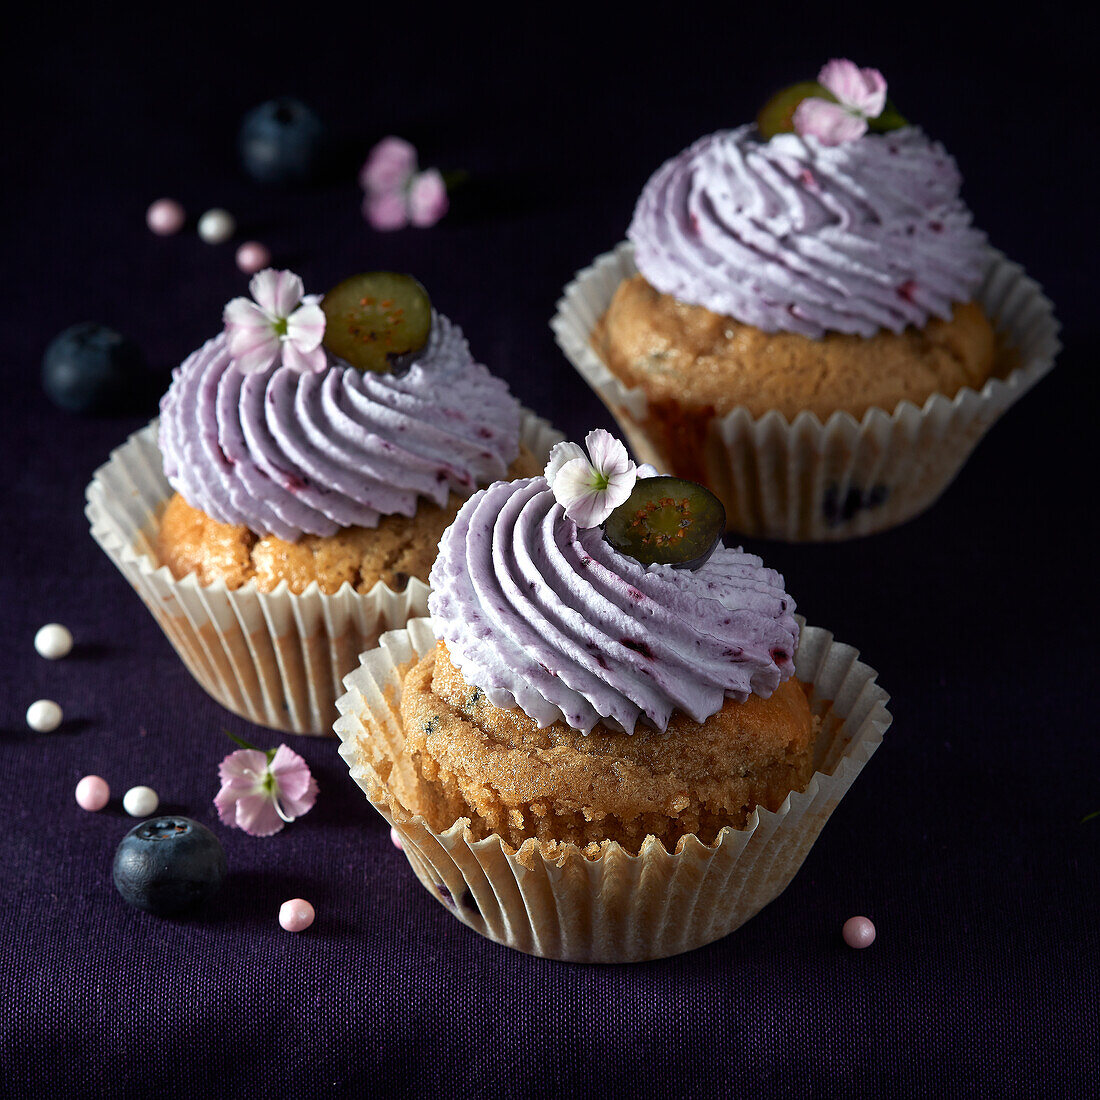 Blackcurrant cupcakes